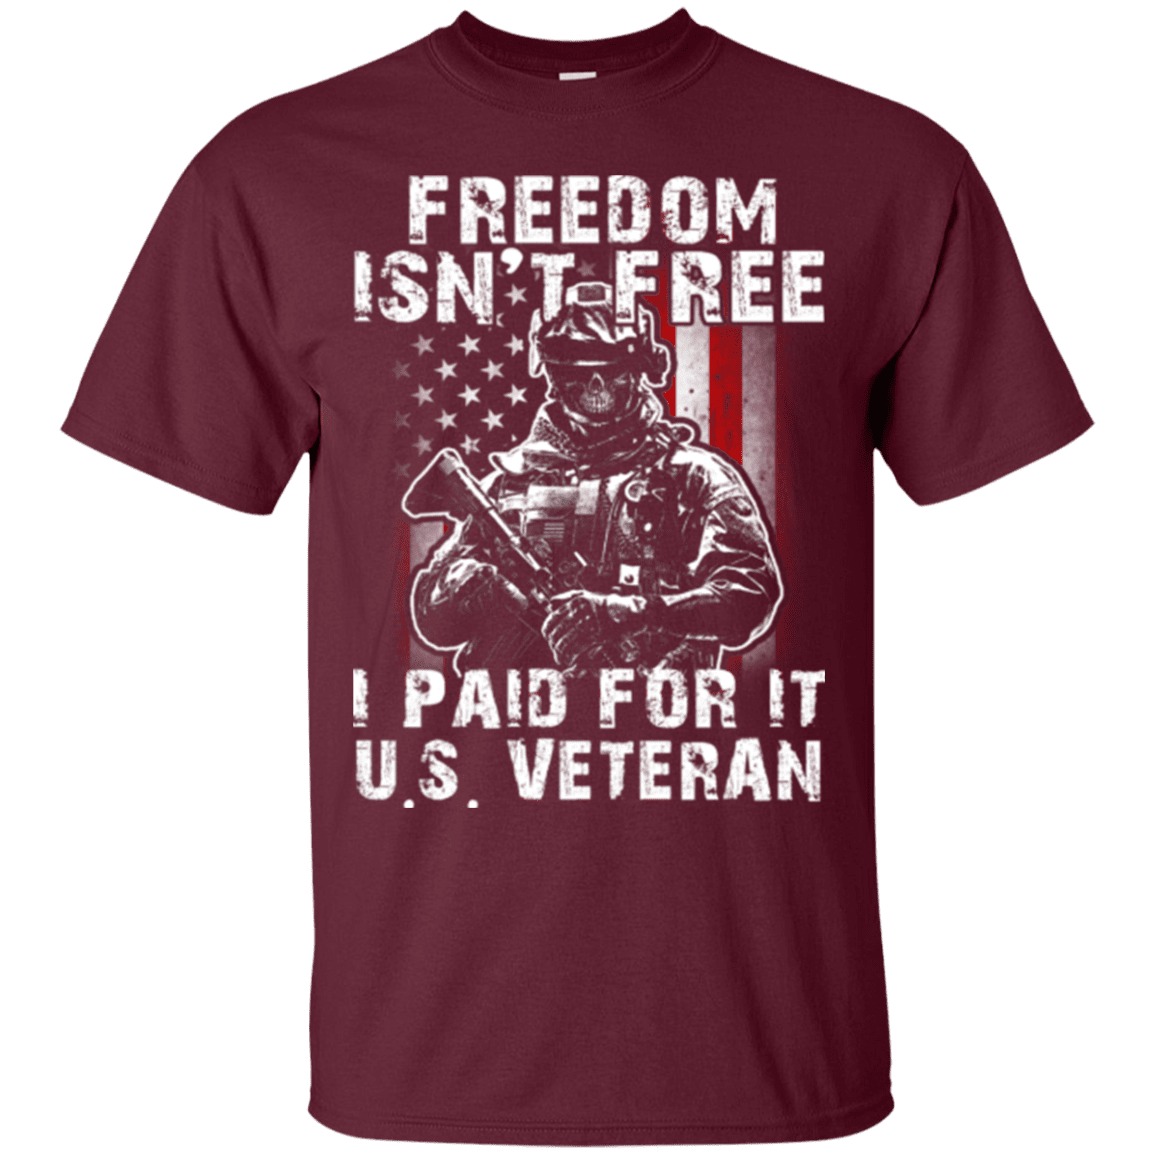 Military T-Shirt "Freedom Isn't Free US Veteran Paid For It"-TShirt-General-Veterans Nation